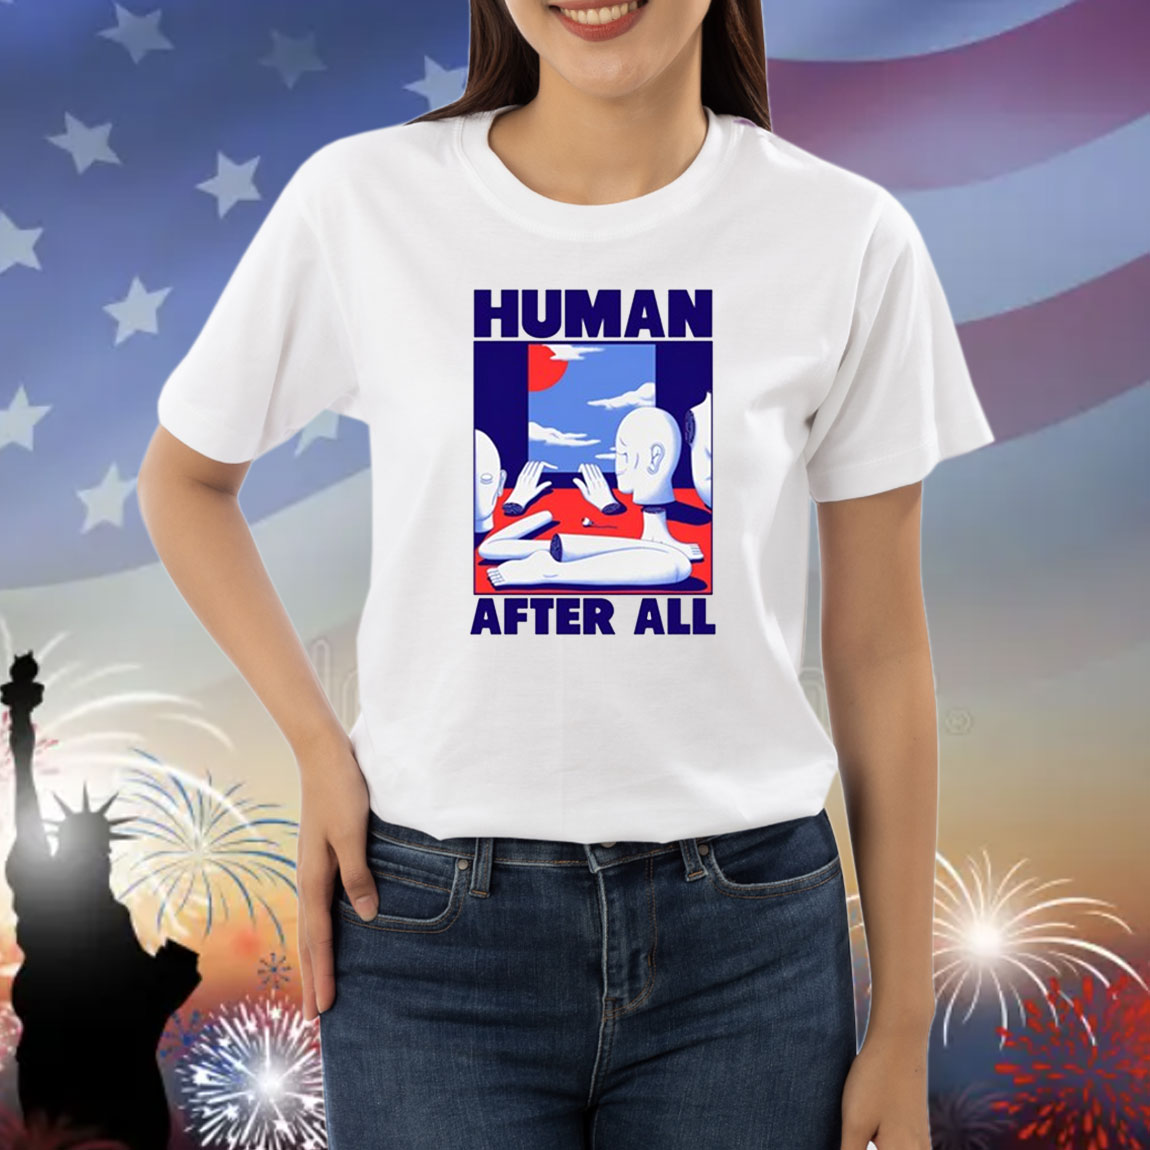 Human After All - Premium Box-Fit Shirts